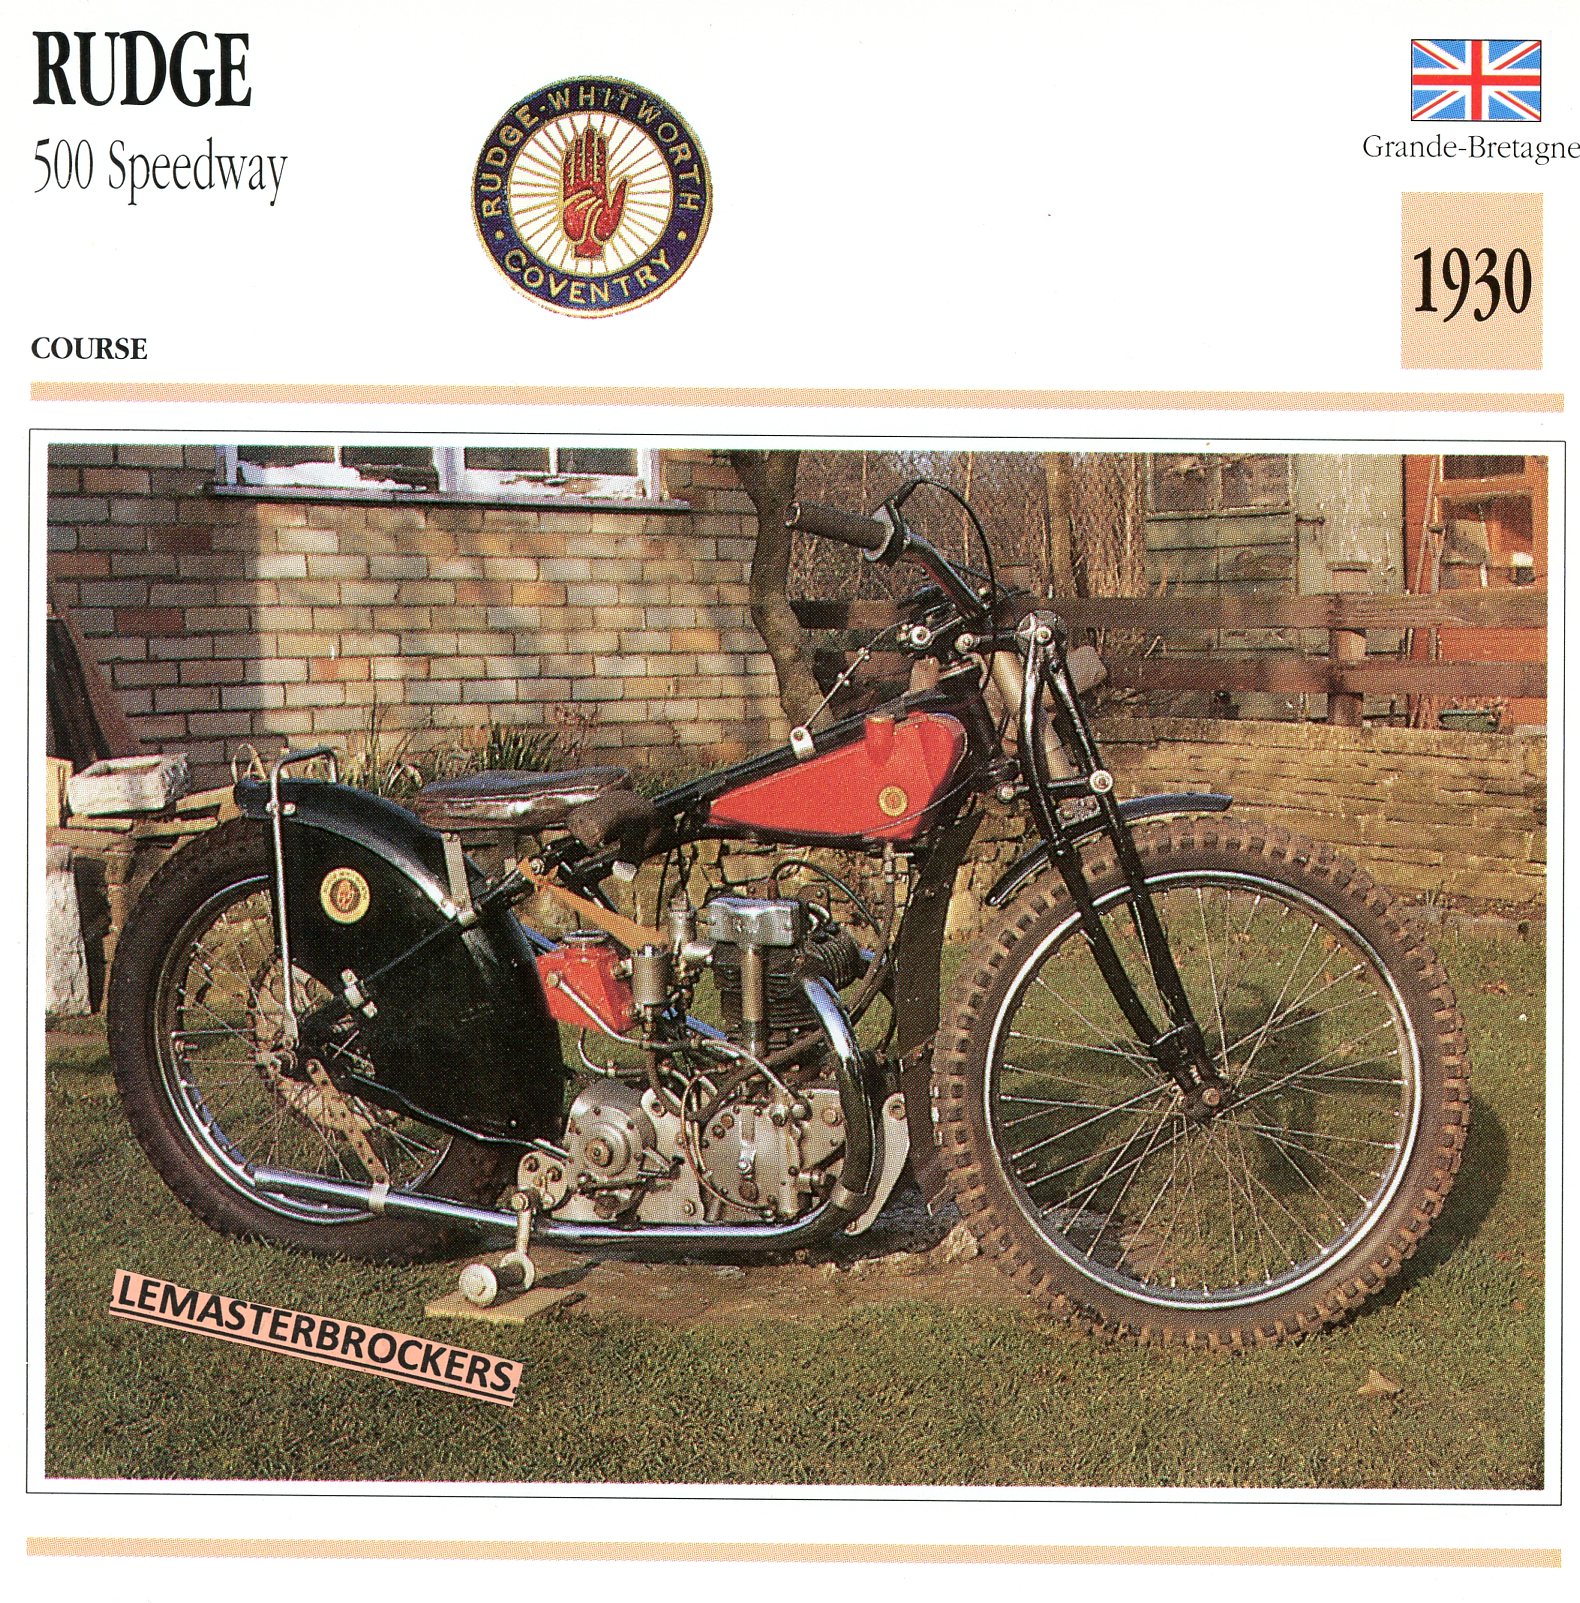 RUDGE-500-SPEEDWAY-1930-FICHE-MOTO-LEMASTERBROCKERS-CARD-MOTORCYCLE